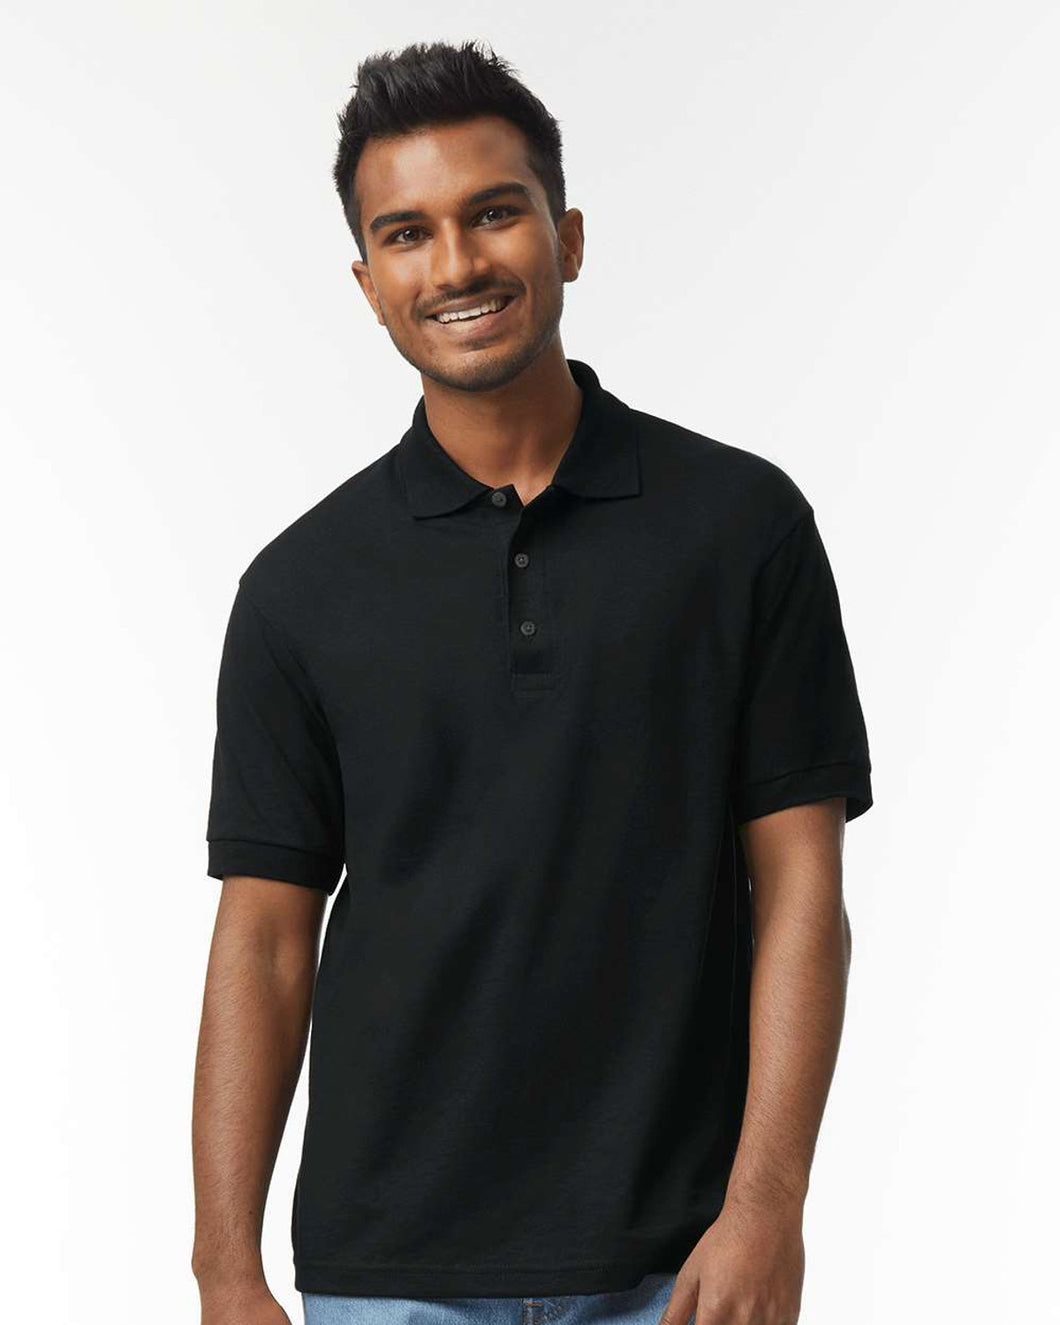 FOTL/Gildan Black Polo Shirt - Adult Sizes S-3XL